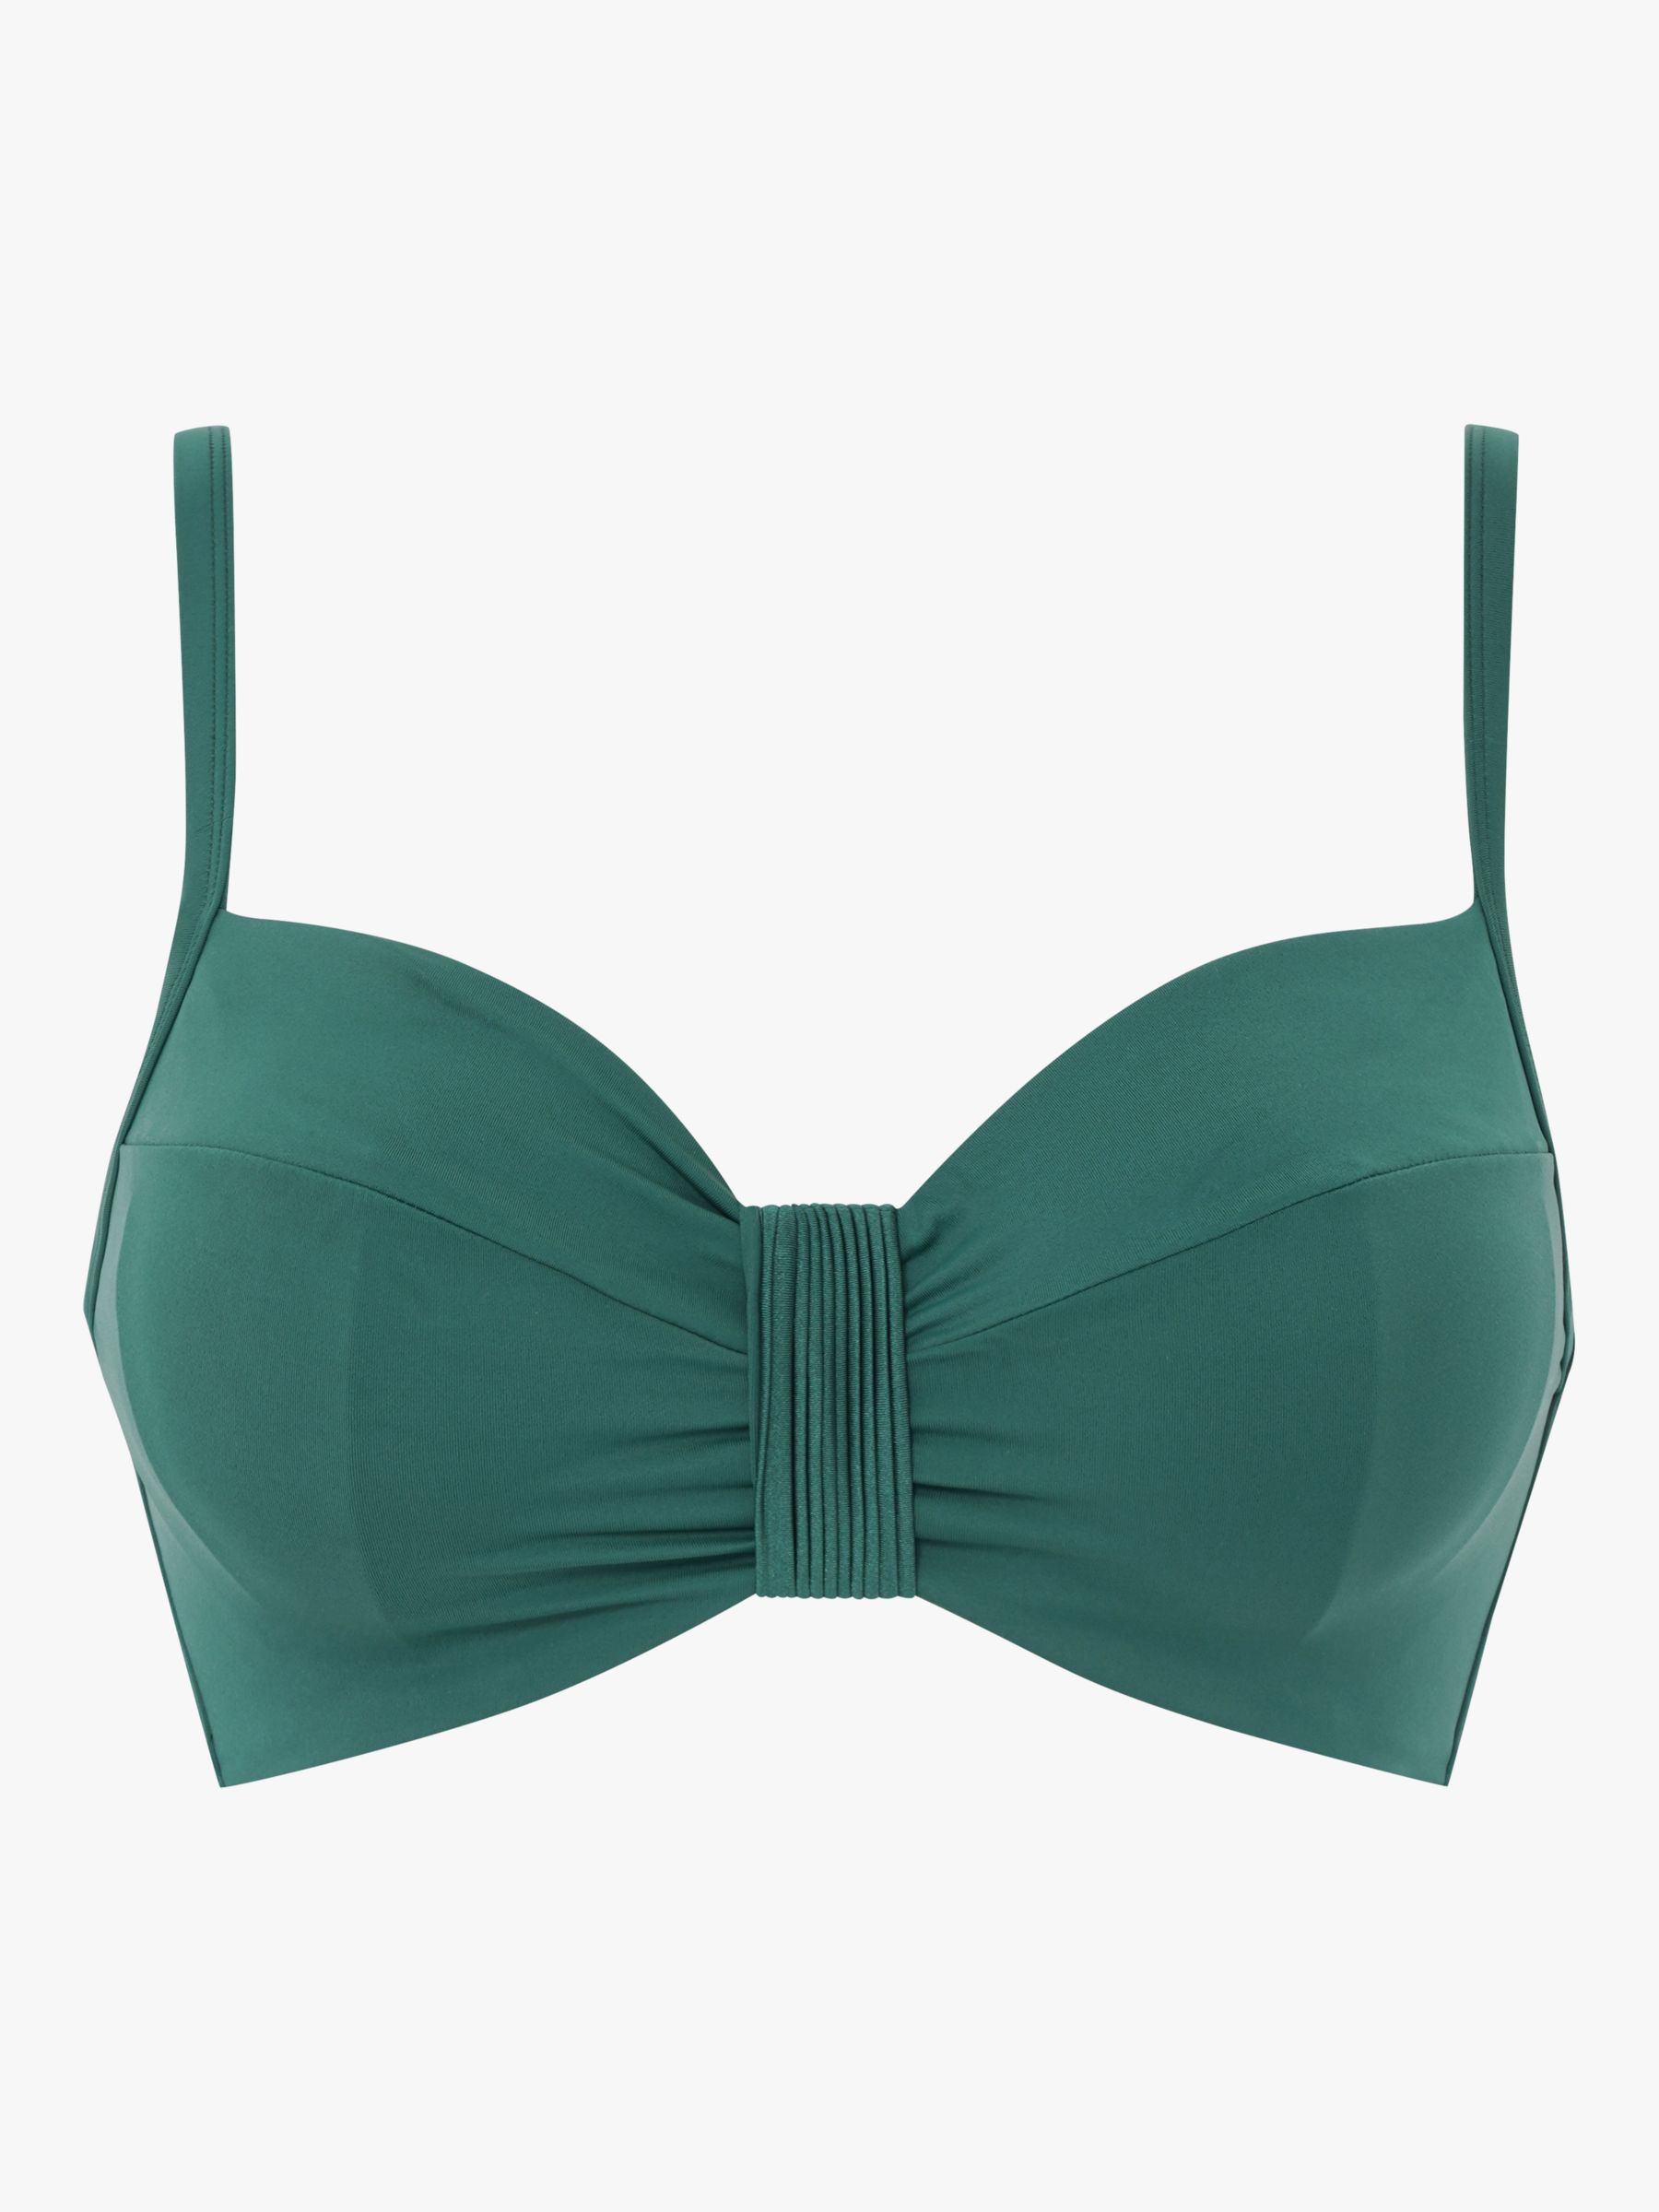 Femilet Arizona Underwired Multiway Stap Bikini Top, Emerald Green, 32D